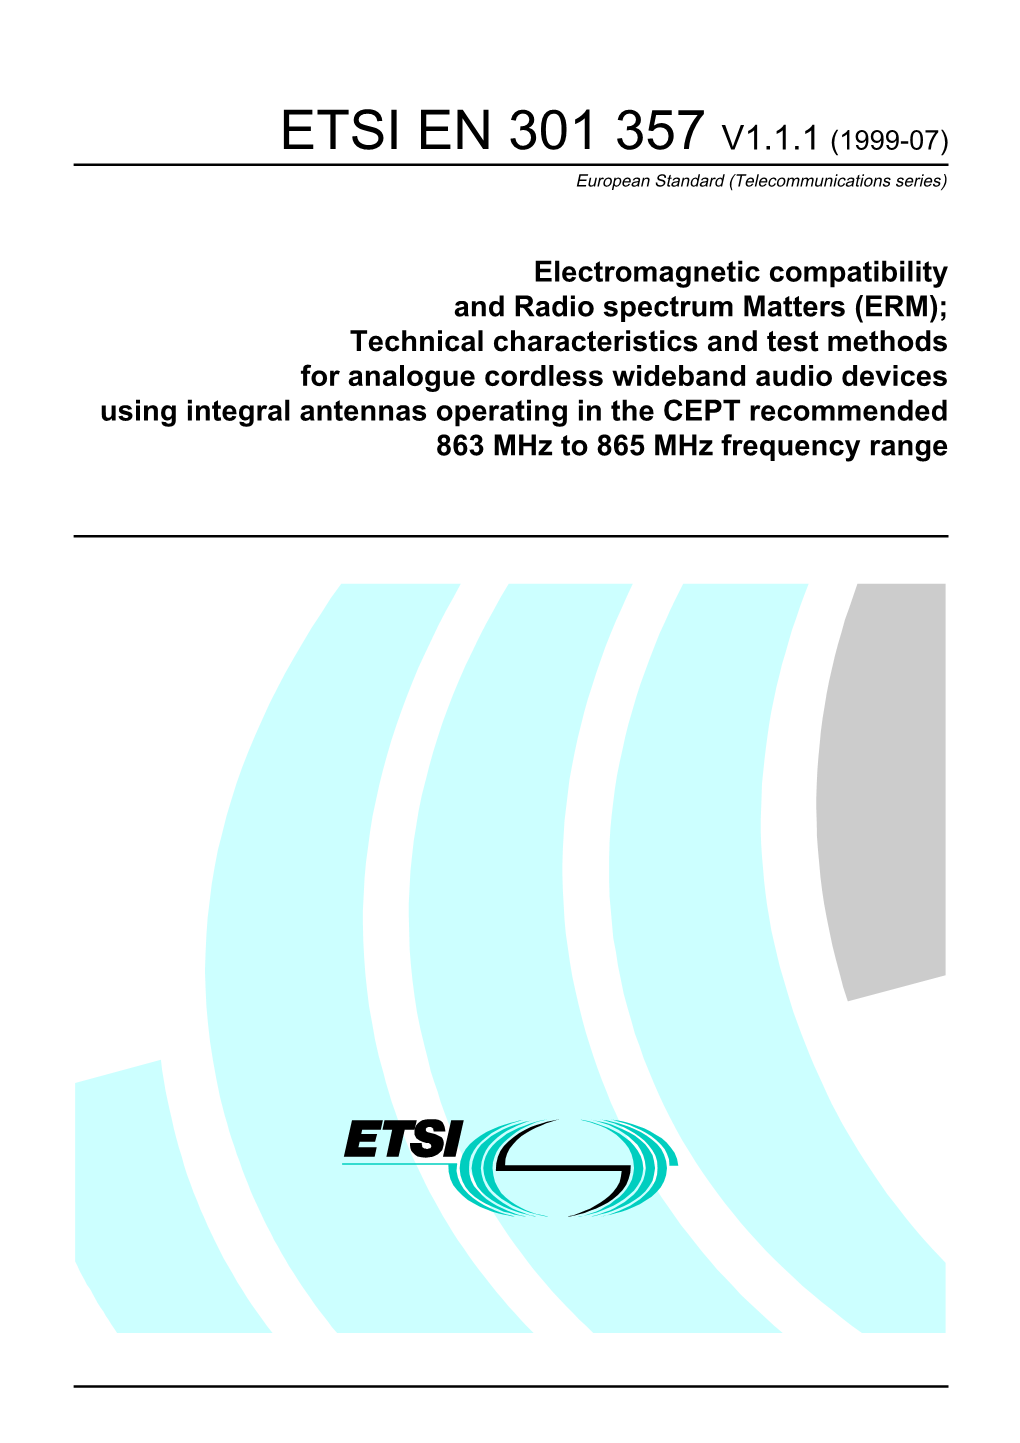 EN 301 357 V1.1.1 (1999-07) European Standard (Telecommunications Series)